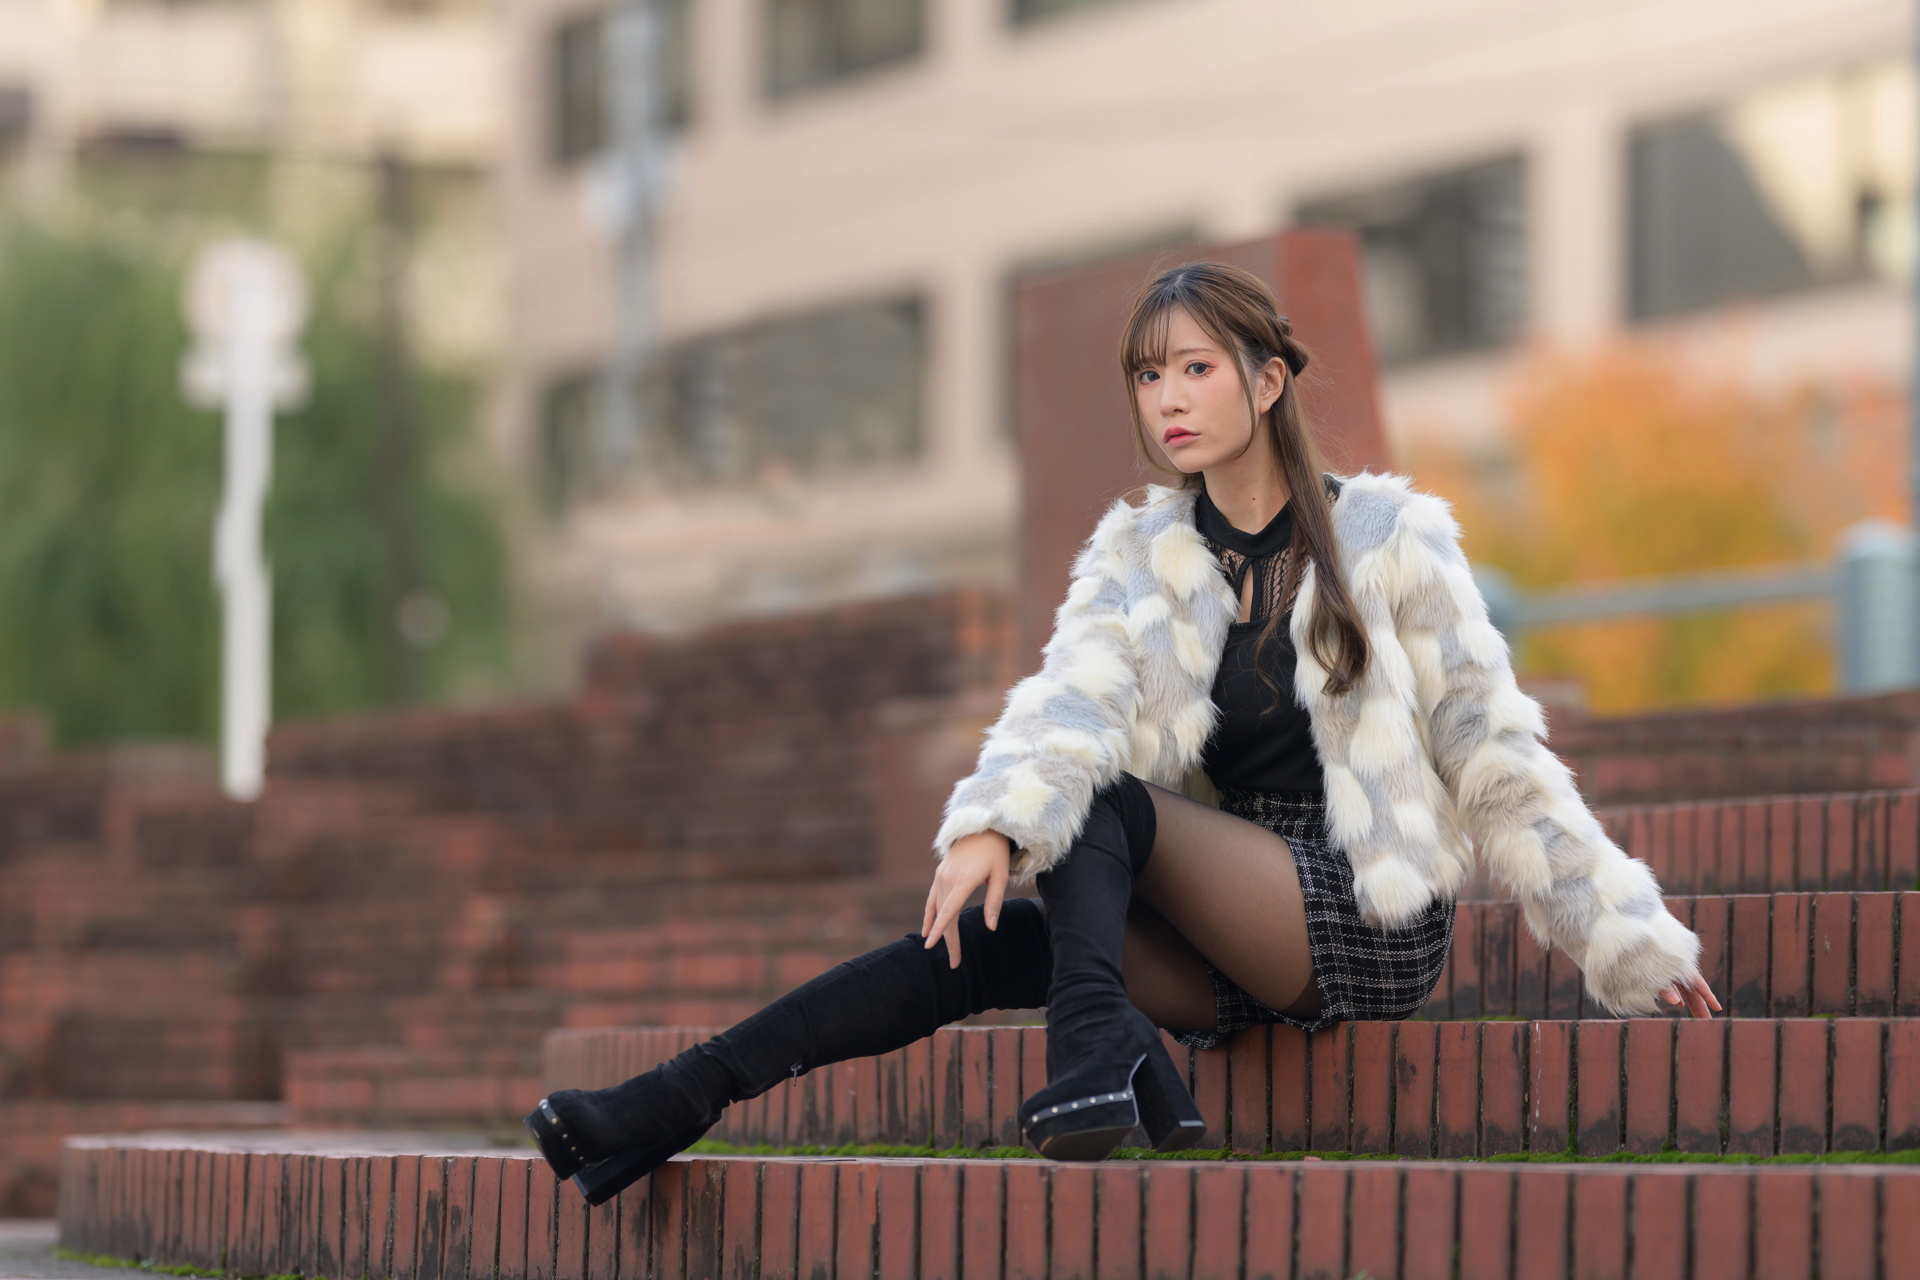 Asian Model Women Long Hair Dark Hair Sitting Knee High Boots Nylons 1920x1280